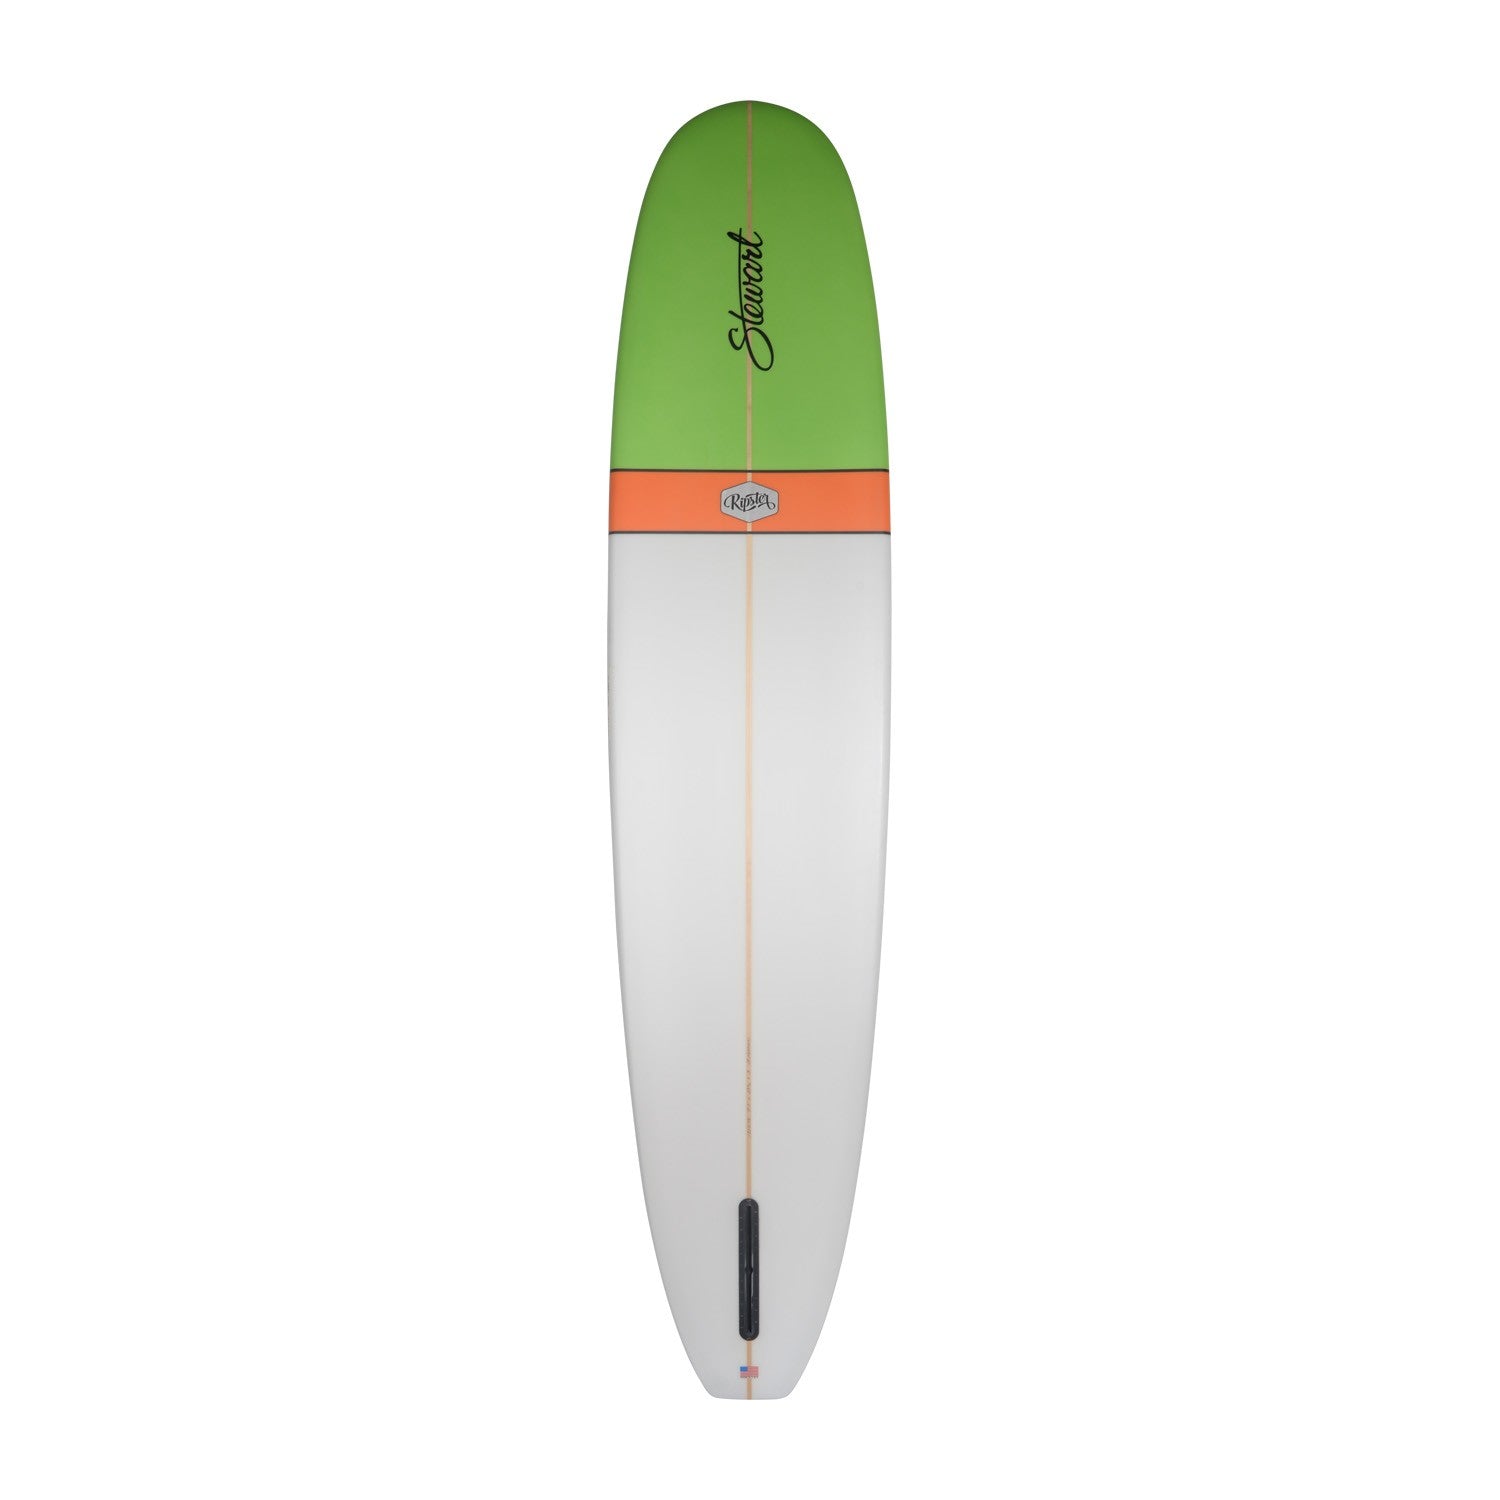 STEWART Surfboards Ripster 9'2 (PU)